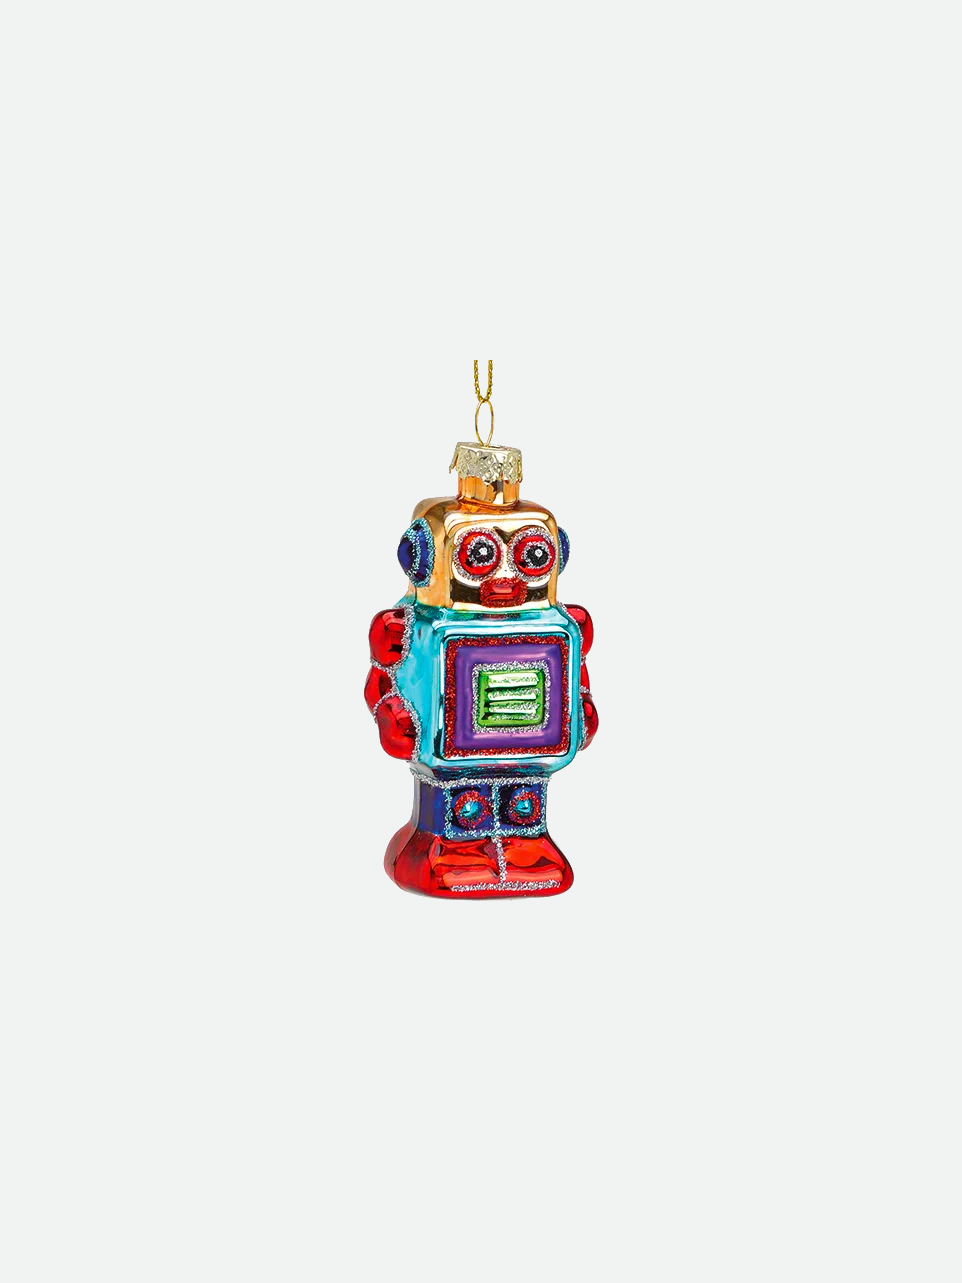 Colorful Robot Ornament